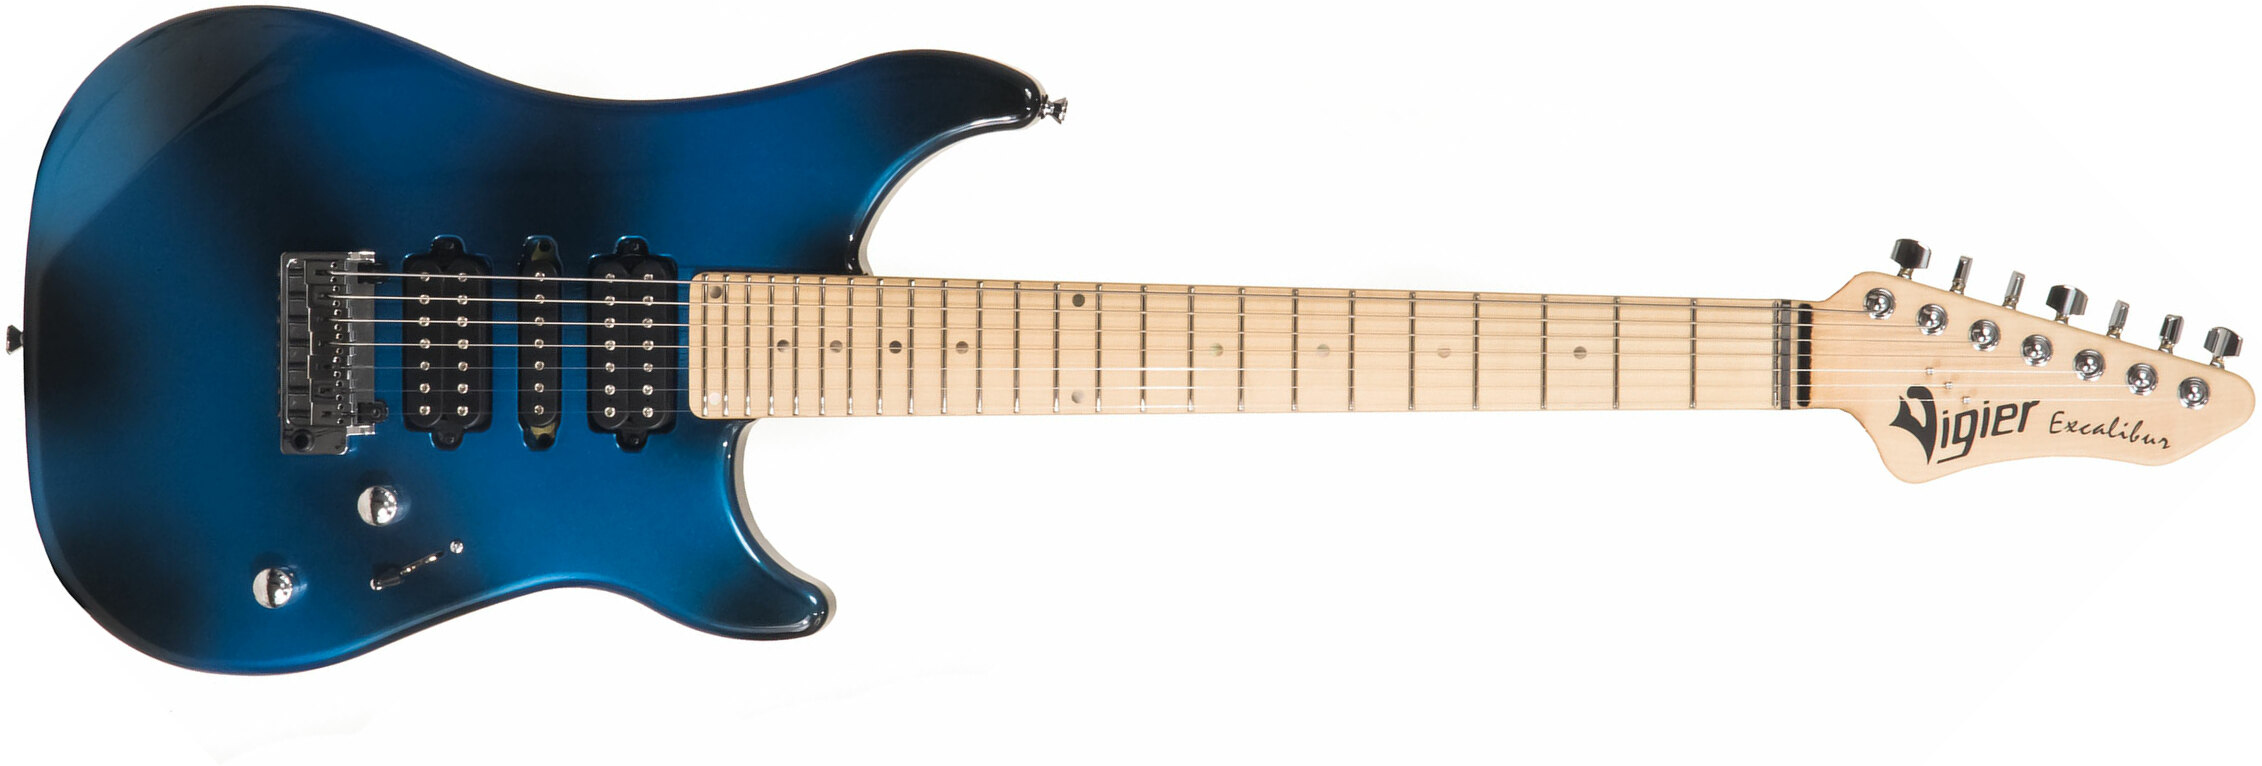 Vigier Excalibur Supra 7c Hsh Trem Mn - Urban Blue - 7 string electric guitar - Main picture